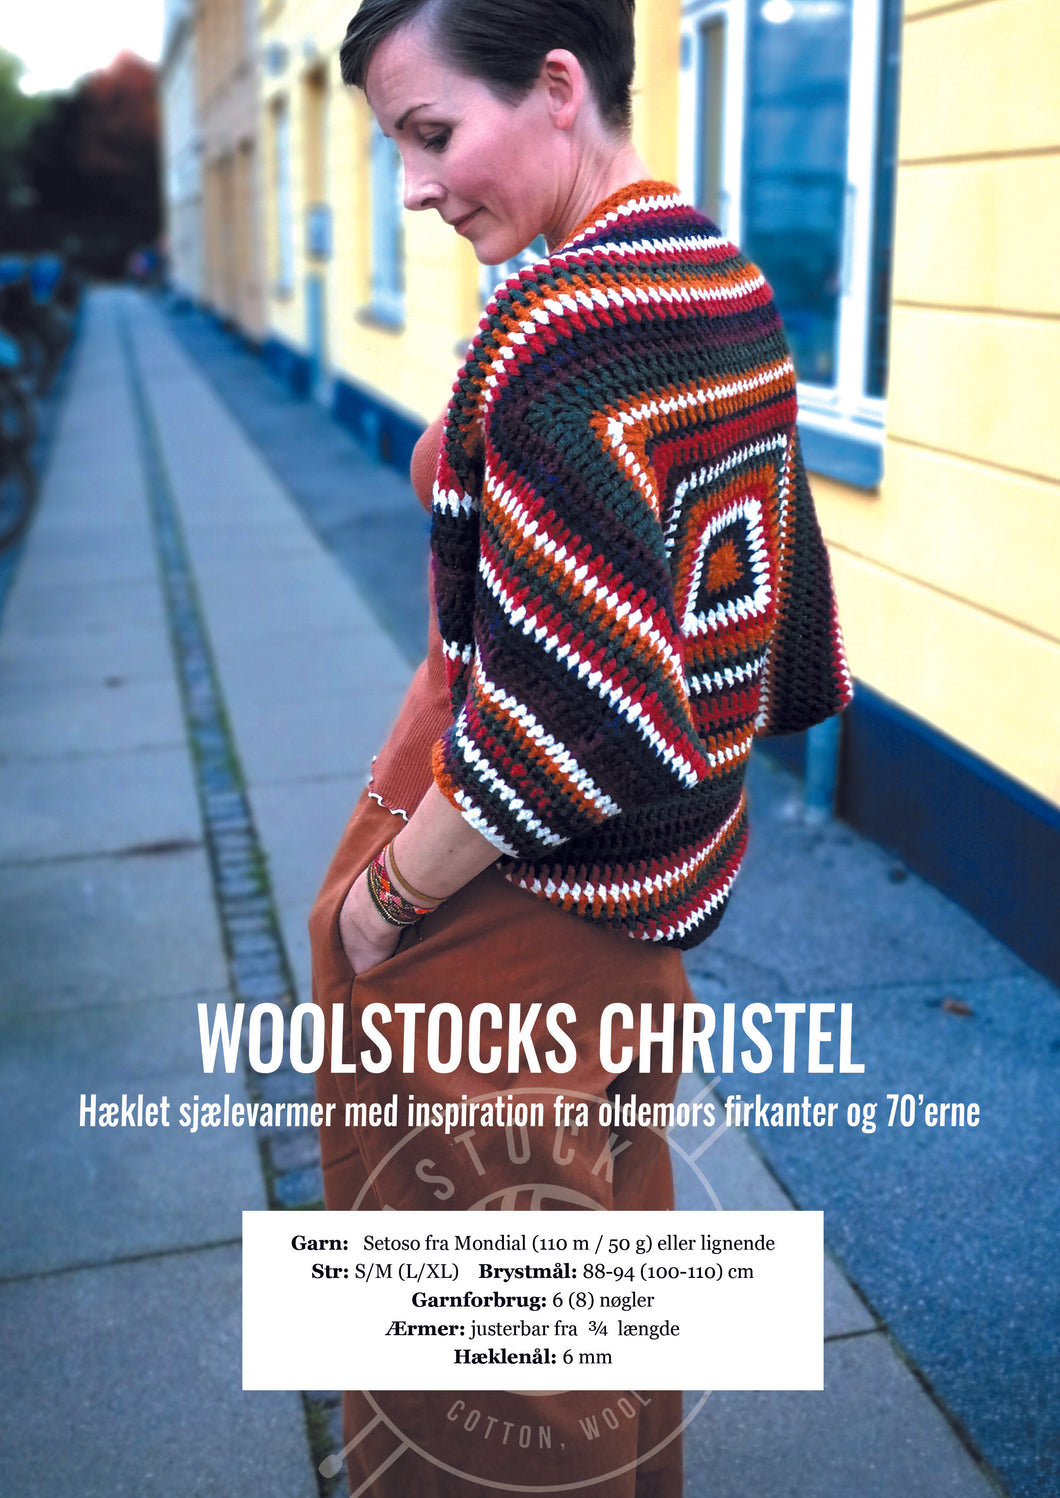 Woolstocks Christel hæklet sjælevarmer